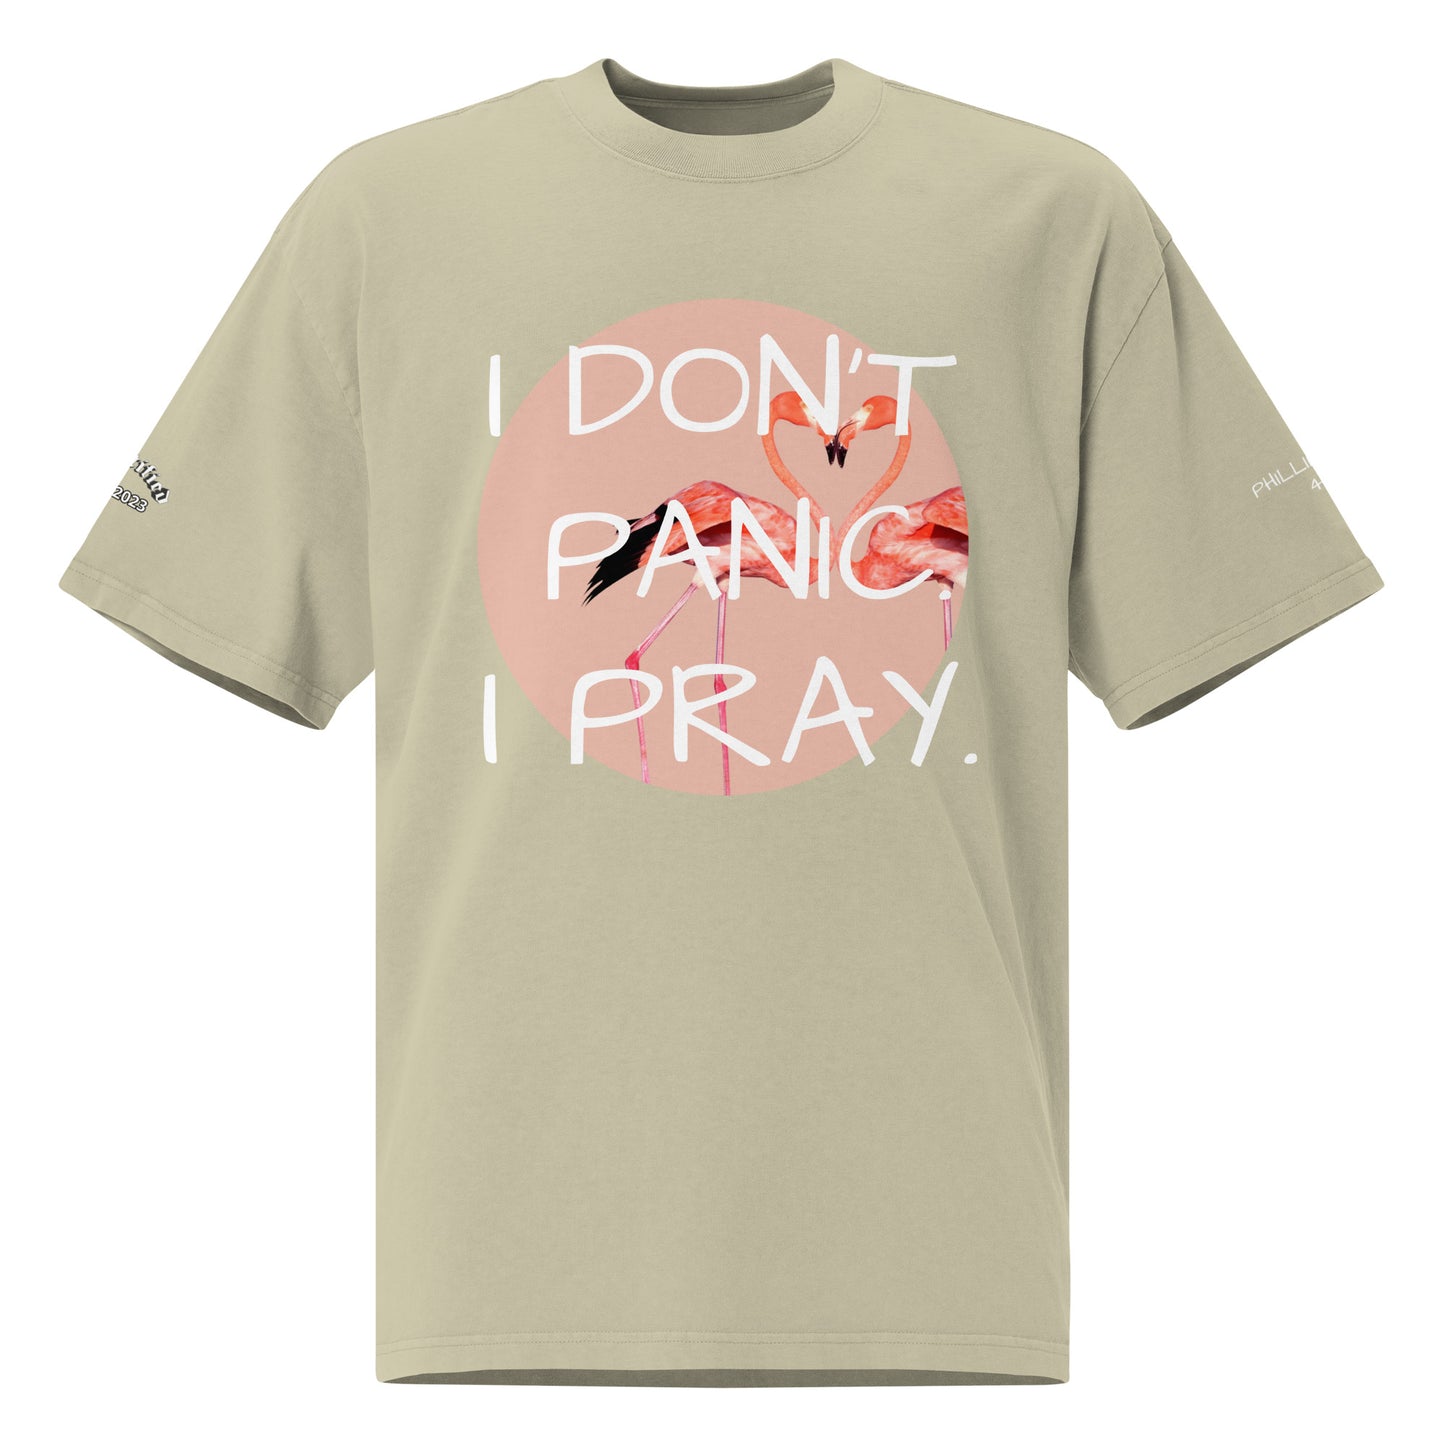 I DON'T PANIC, I PRAY.- Oversized faded t-shirt